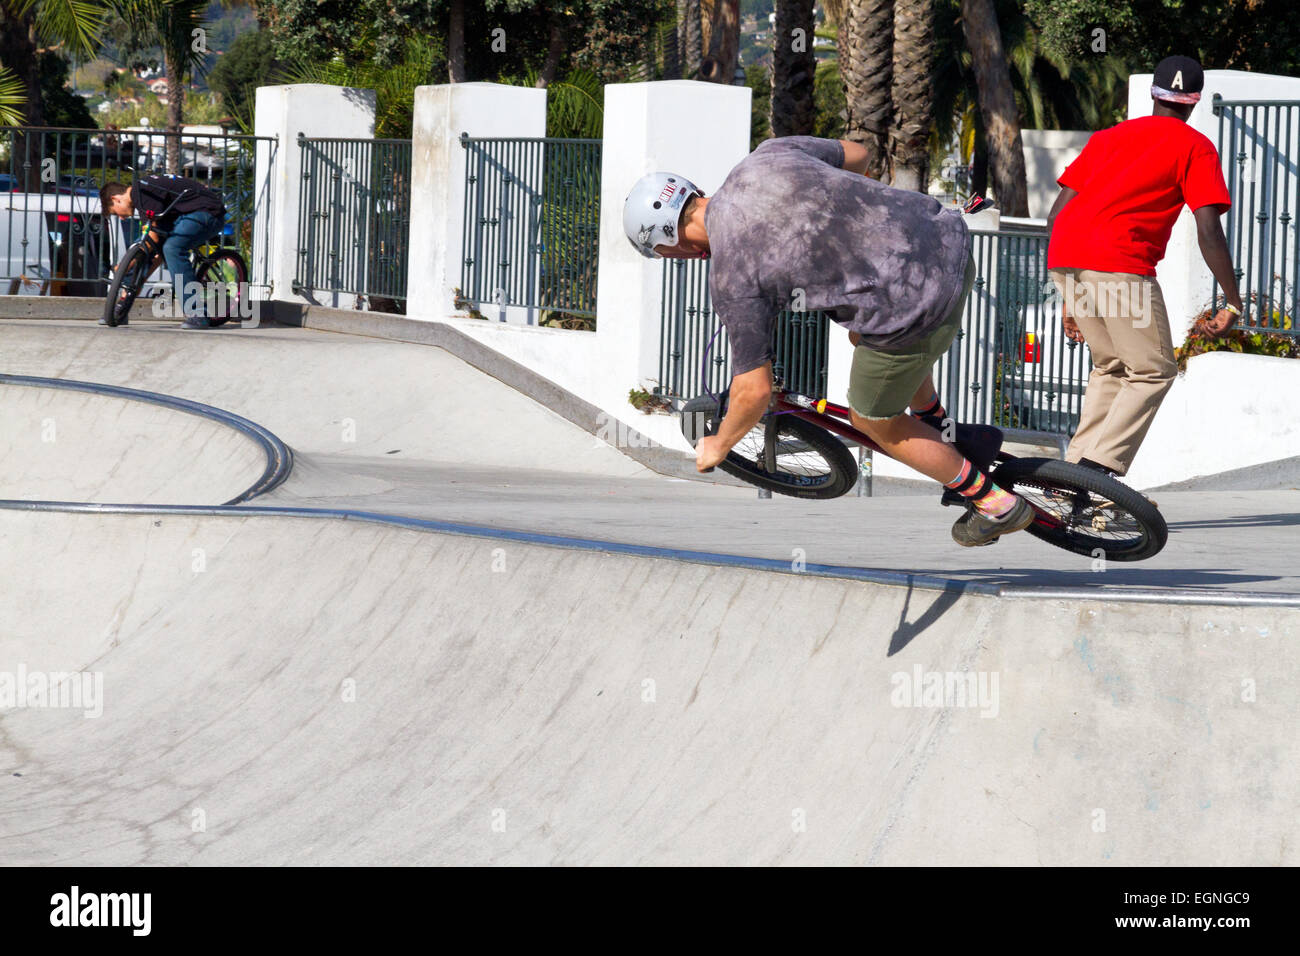 A boy making a stunt jump on his bike at a skate park in Santa Barbara, California. Stock Photo